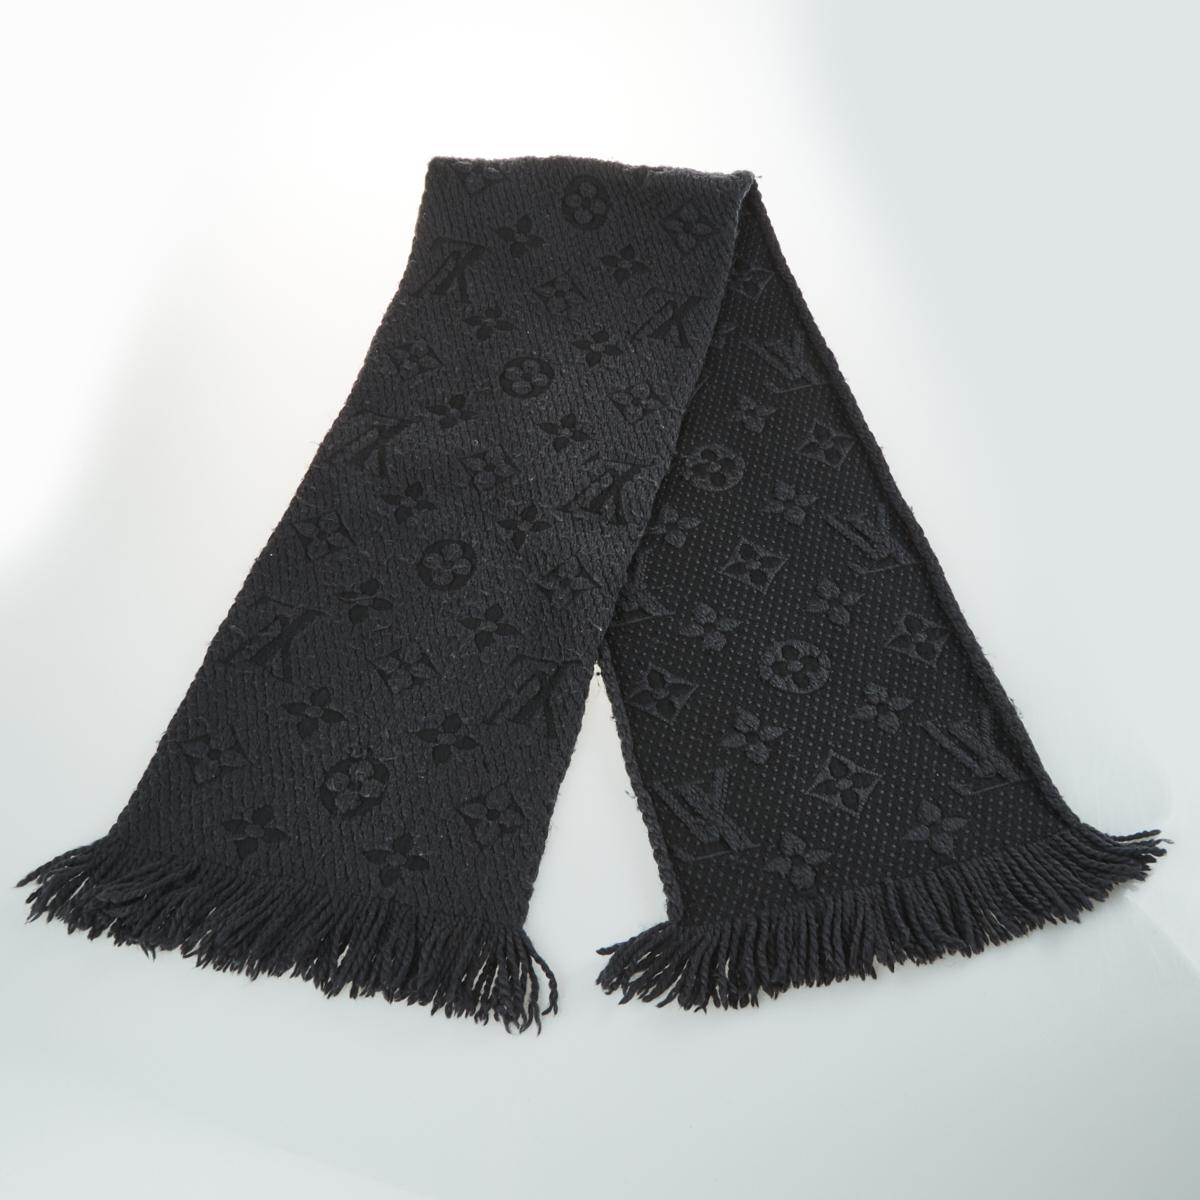 Sold at Auction: Louis Vuitton Italian Silk Scarf